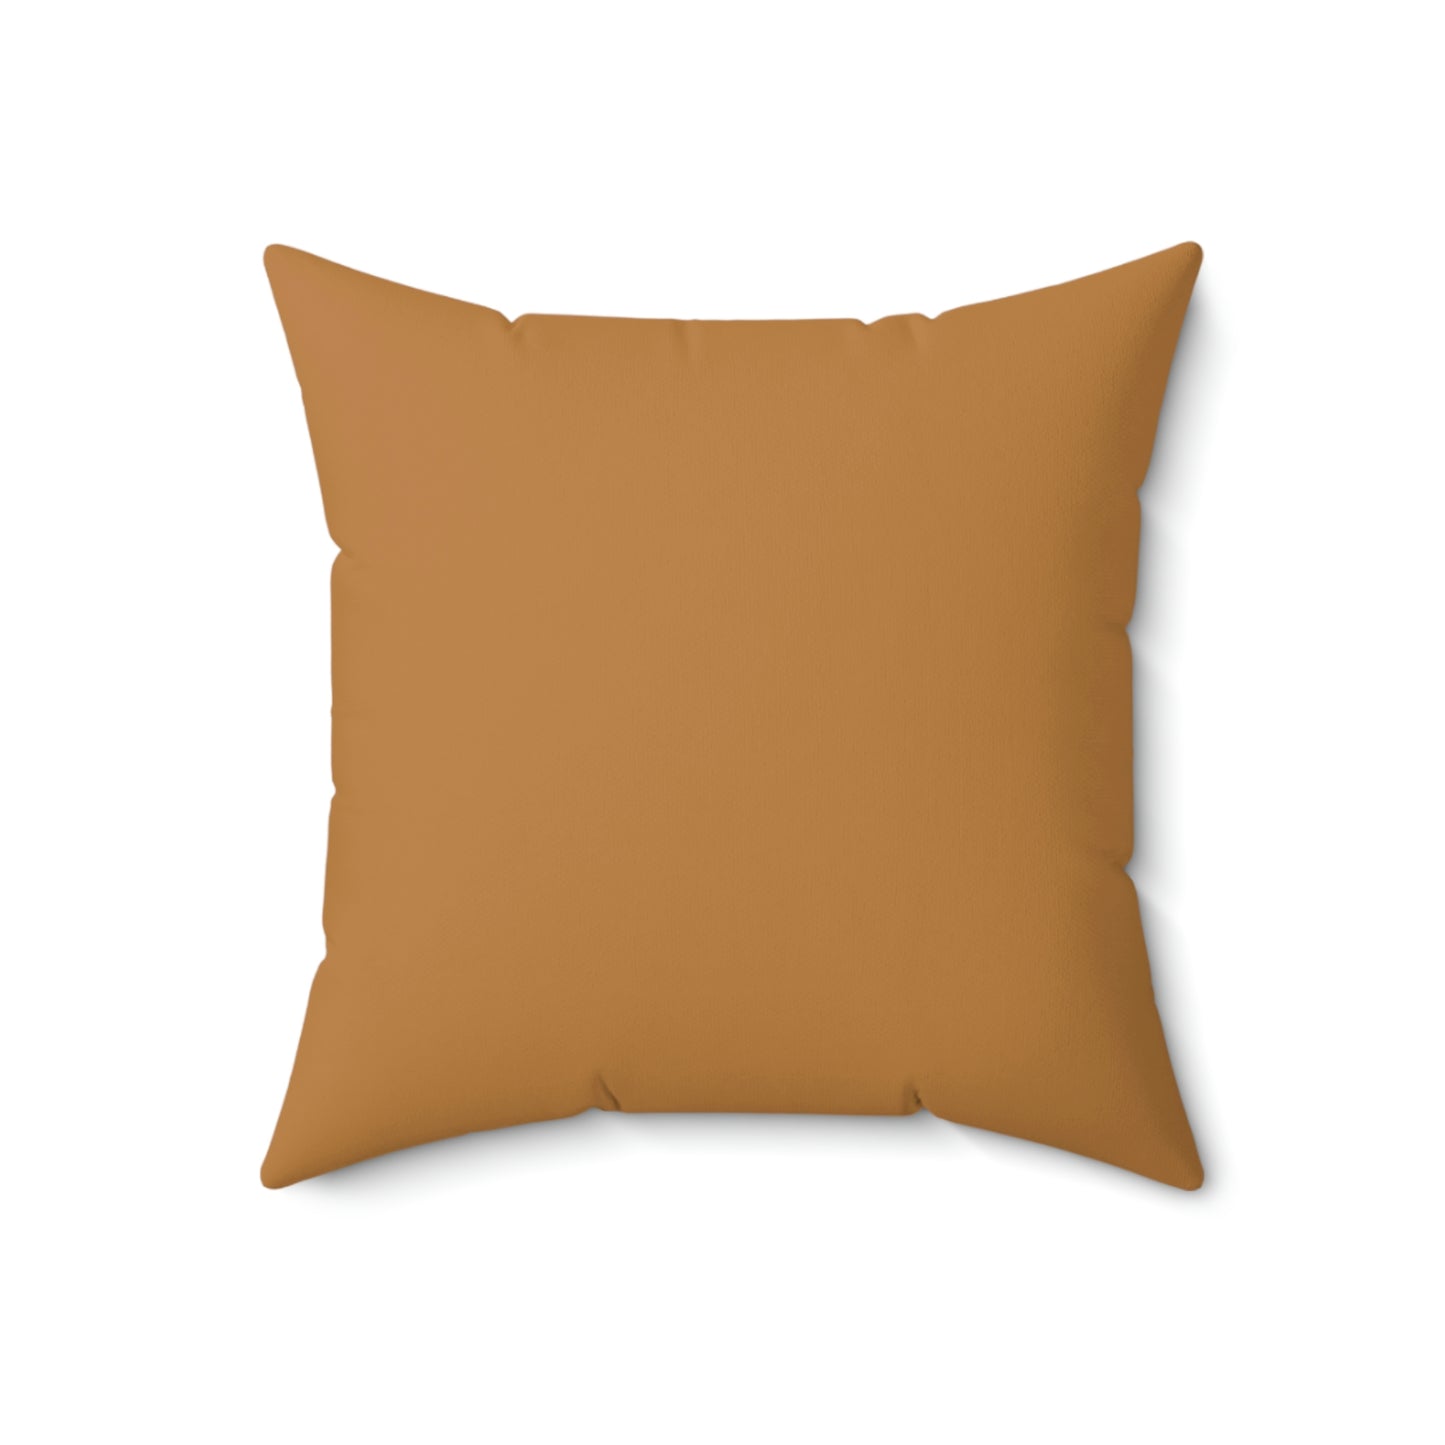 Spun Polyester Square Pillow Case "Super Mom on Light Brown”